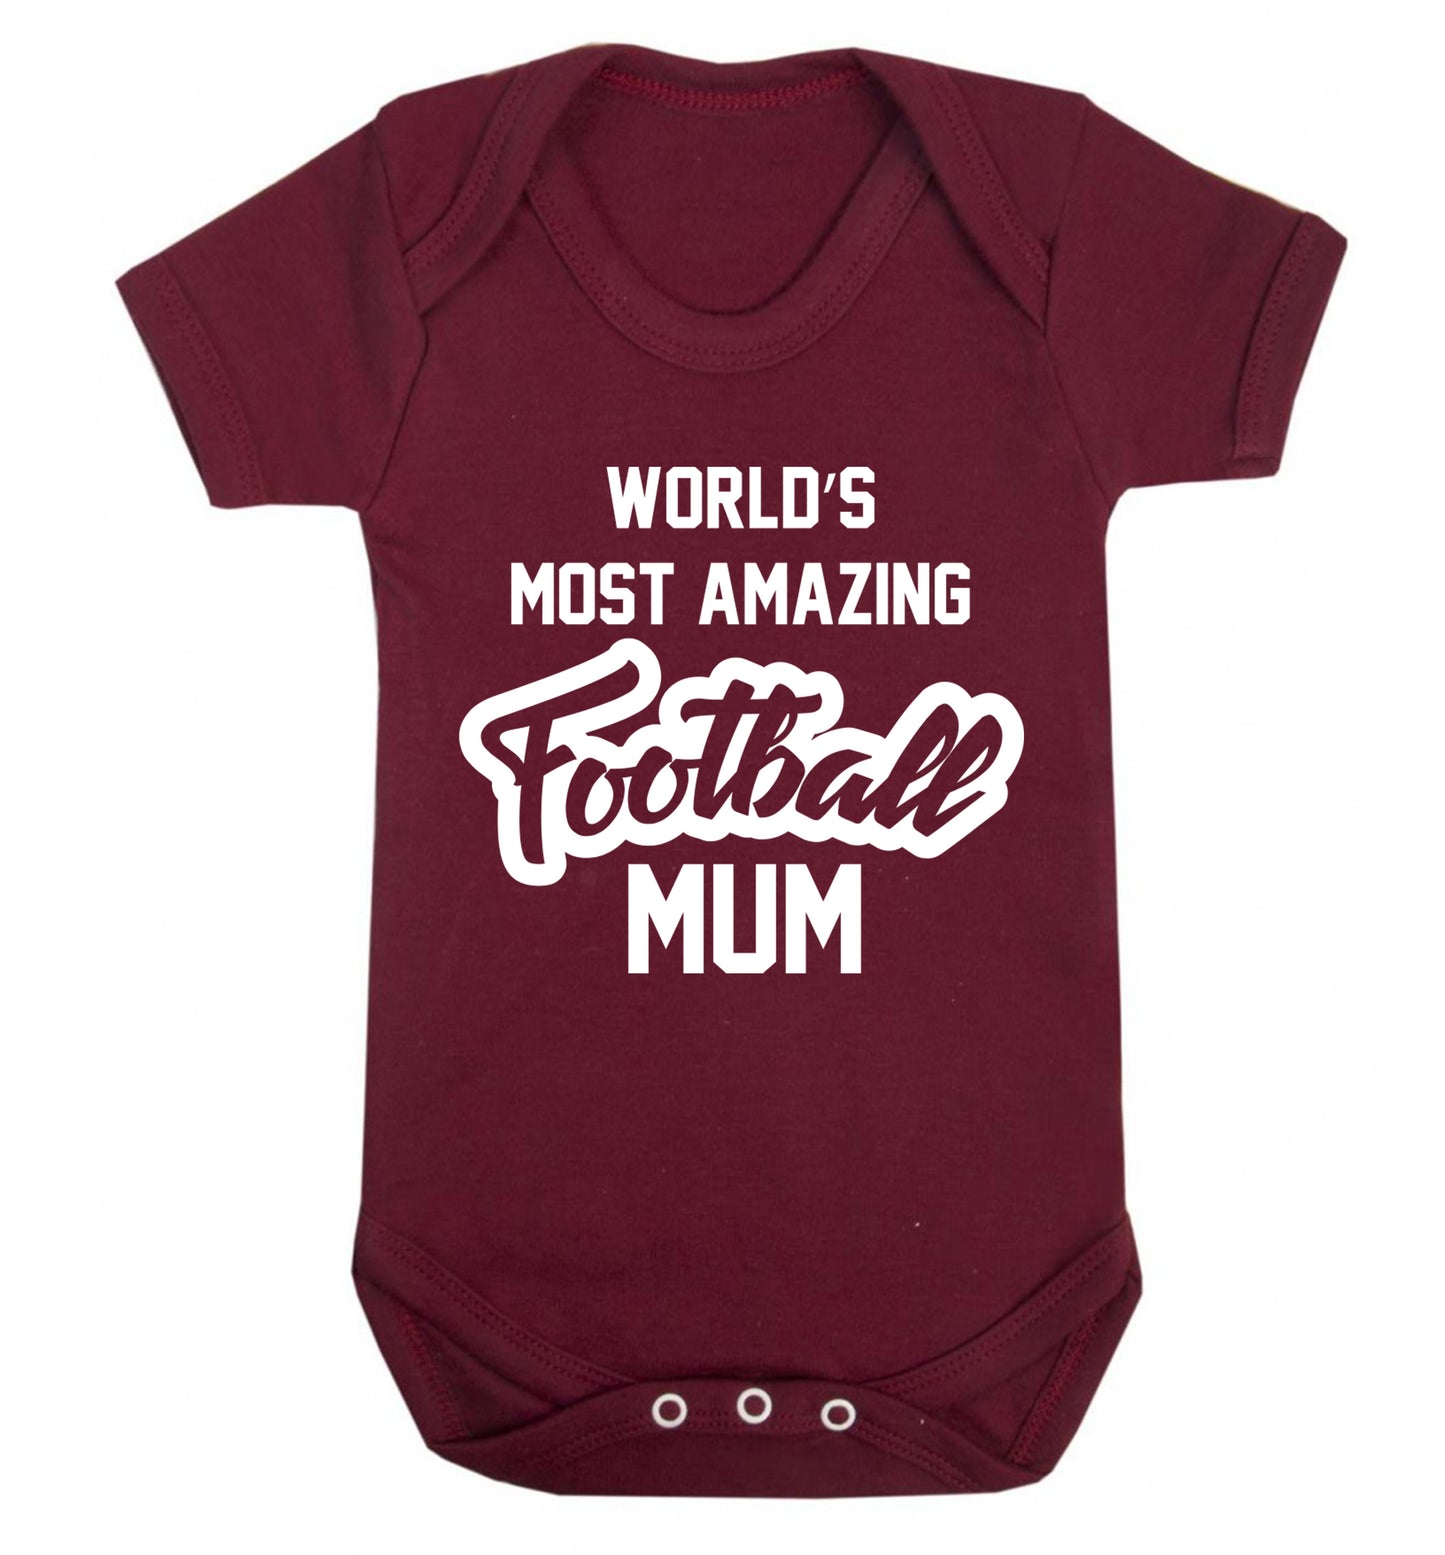 Worlds most amazing football mum Baby Vest maroon 18-24 months